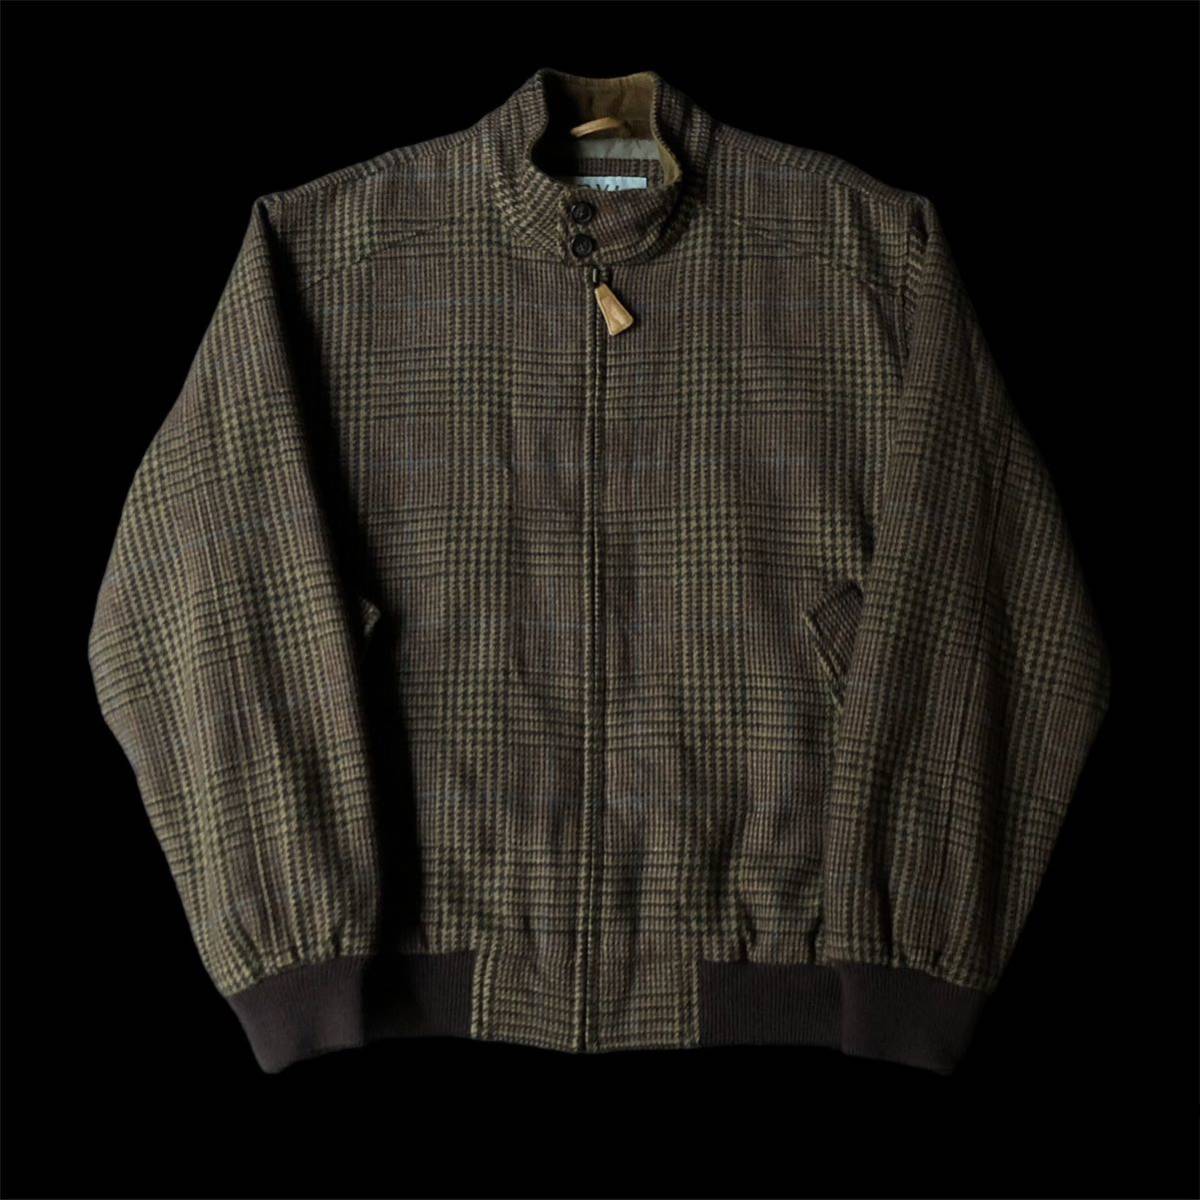 90s Orvis Wool Tweed Harrington Jacket 90年代 オービス ウール ツイード ハリントンジャケット スウィングトップ vintage ヴィンテージ